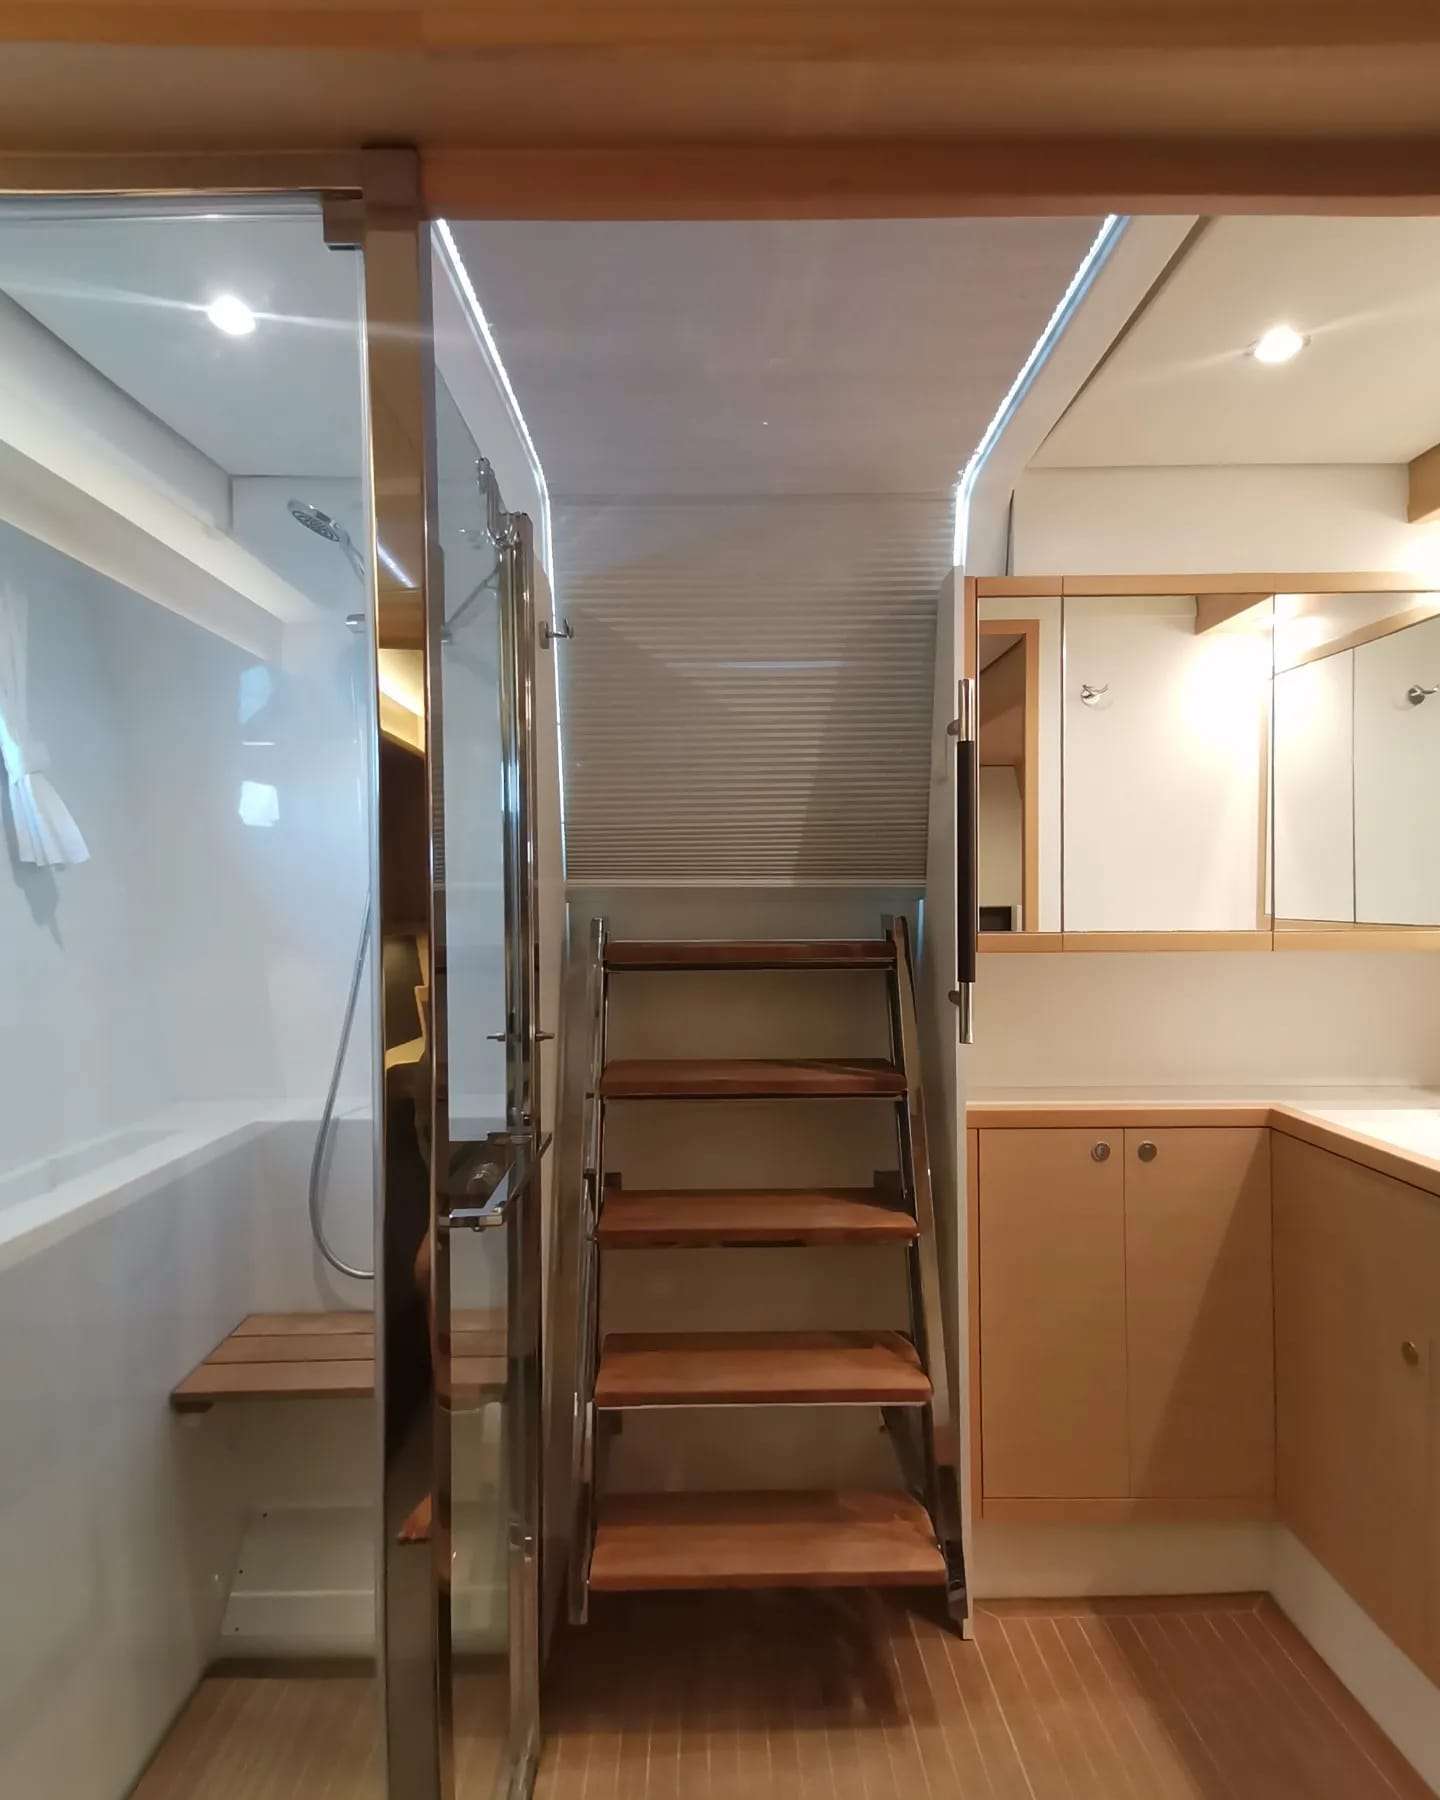 ISLAS CHAFARINAS Yacht Charter - Bathroom and rear access from aft cabin